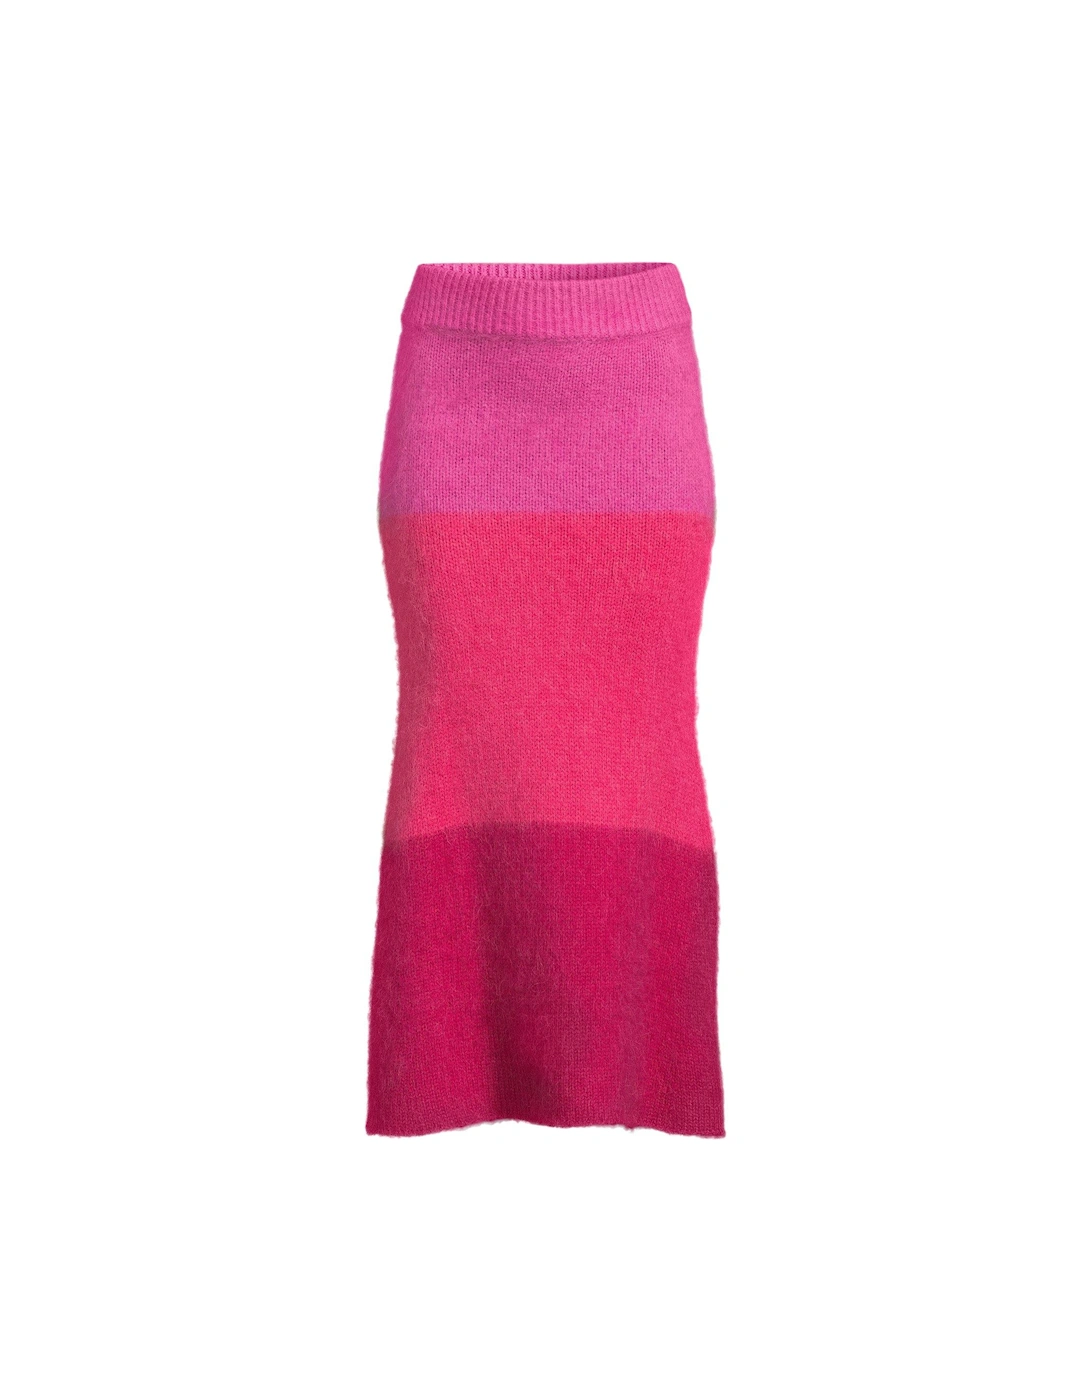 Maddox Stripe Skirt - Pink/Red